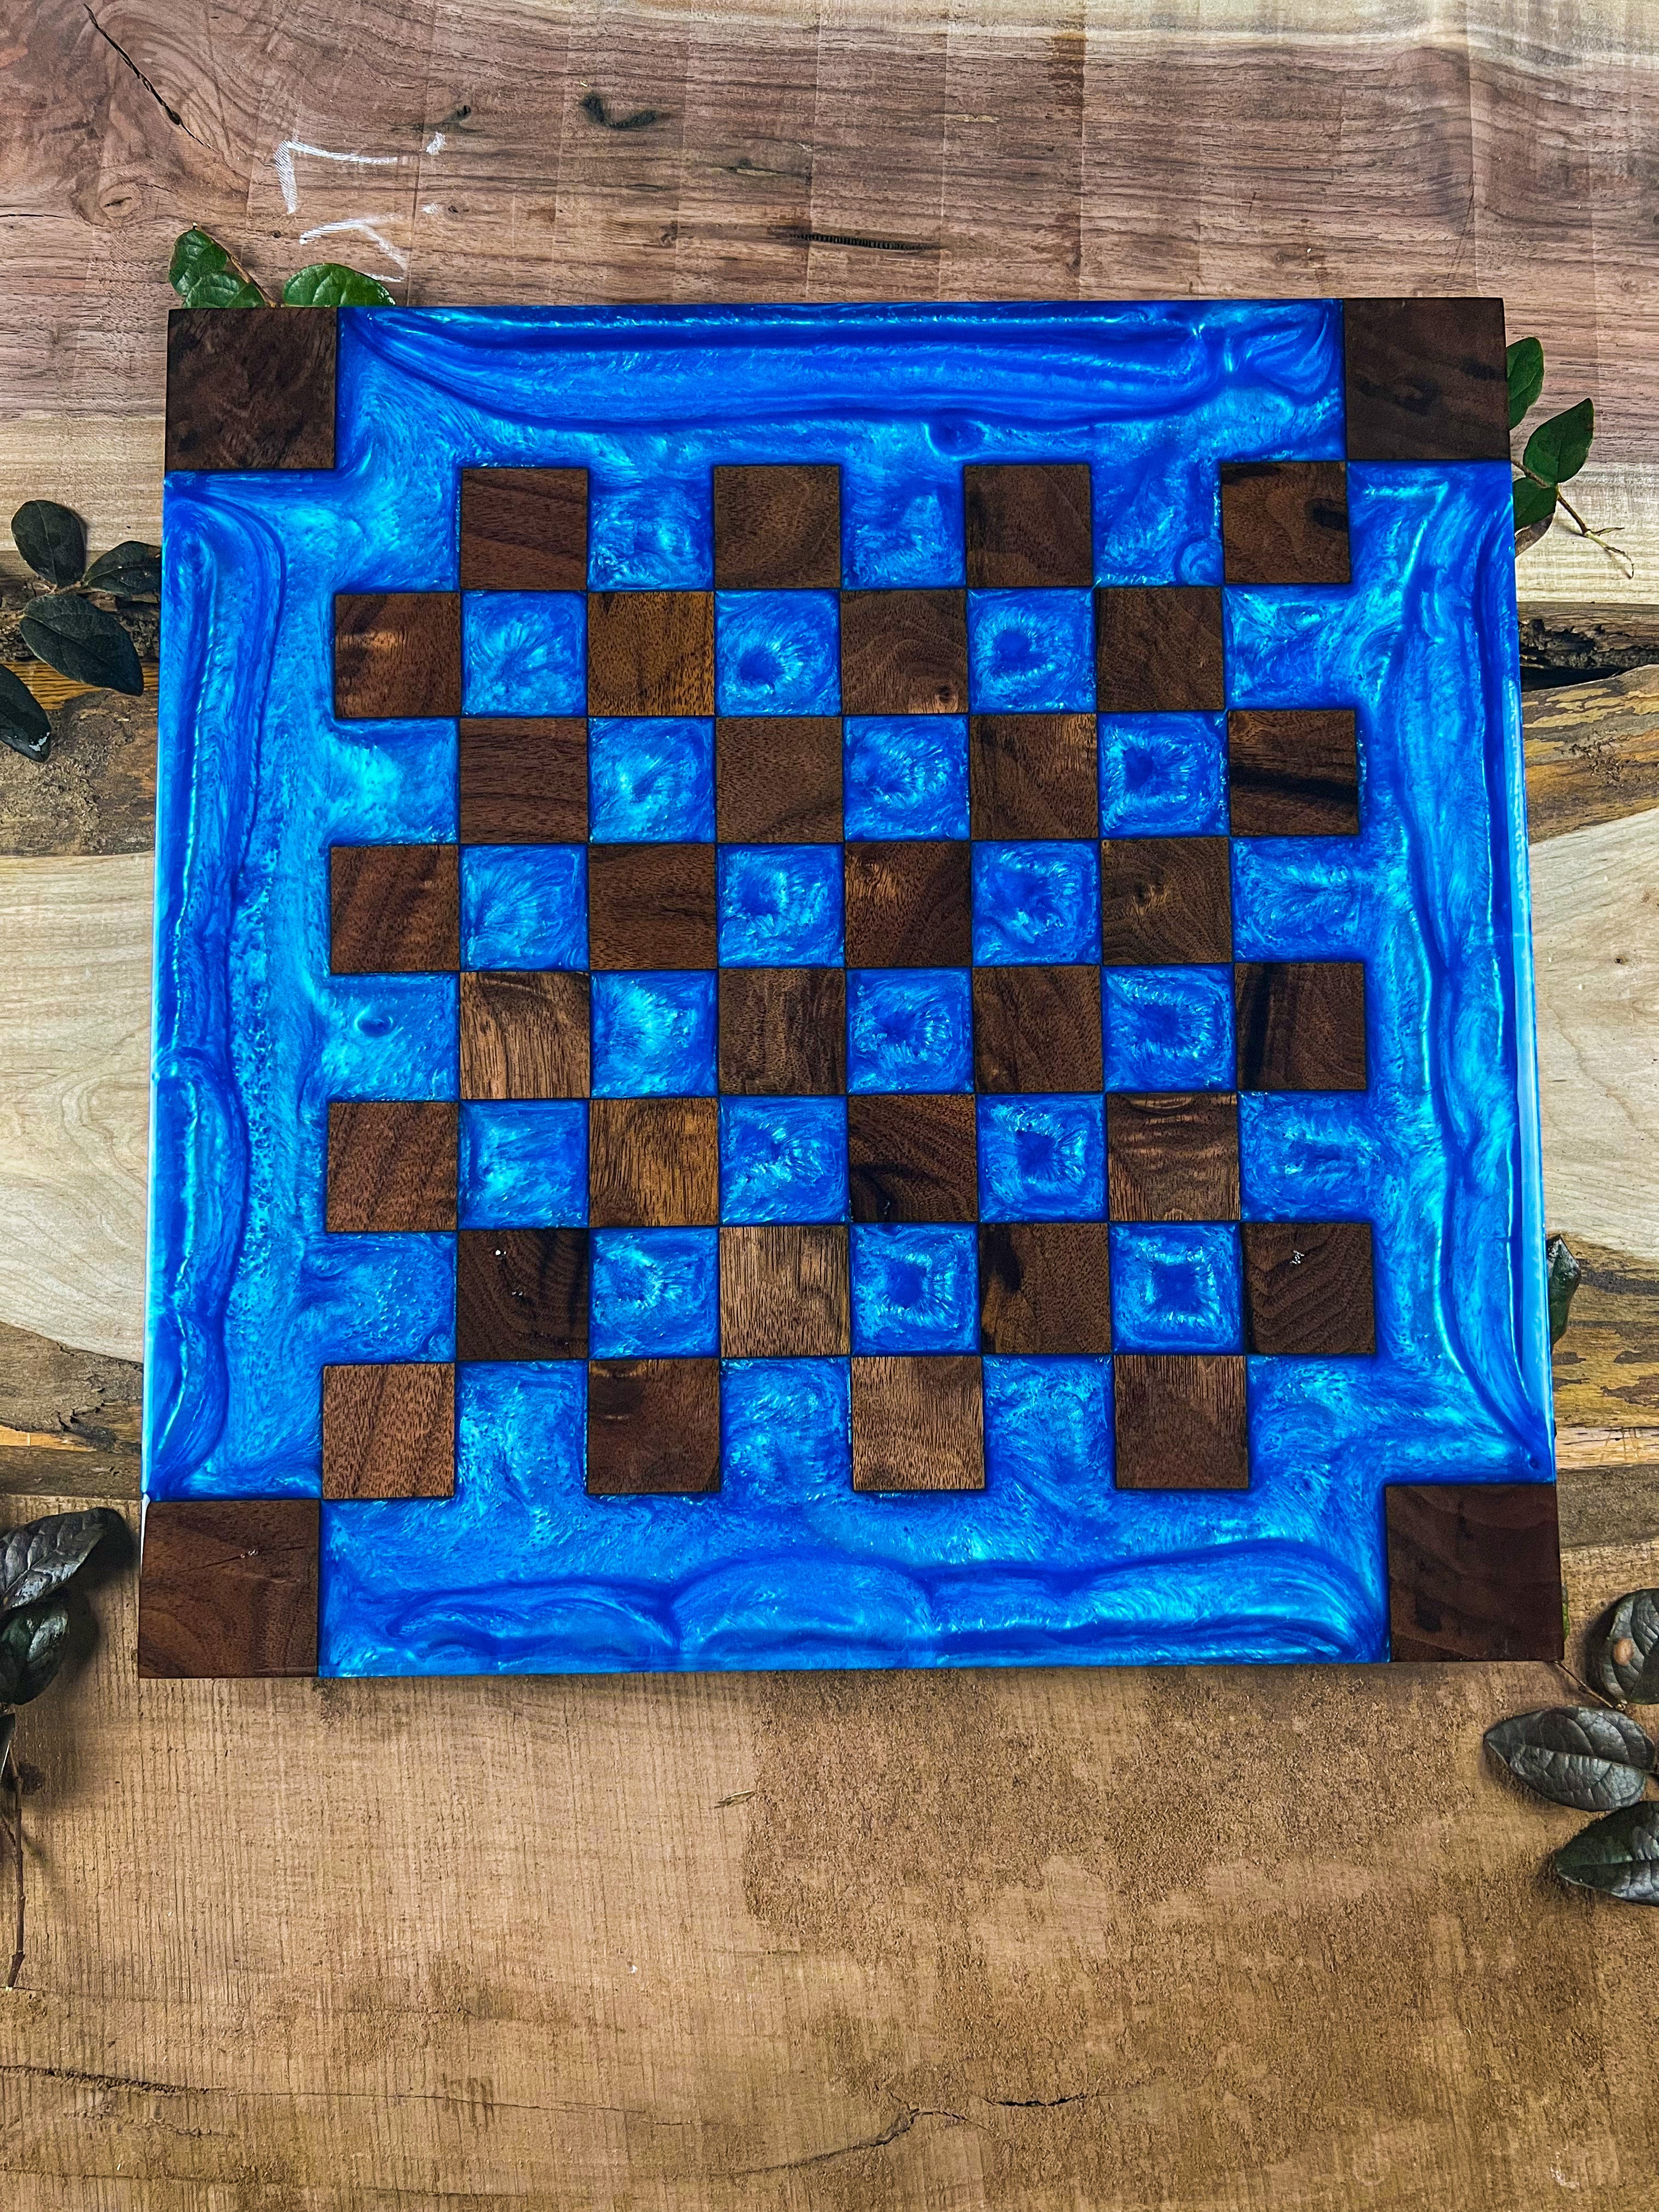 Black Walnut Caribbean Blue Chess Board